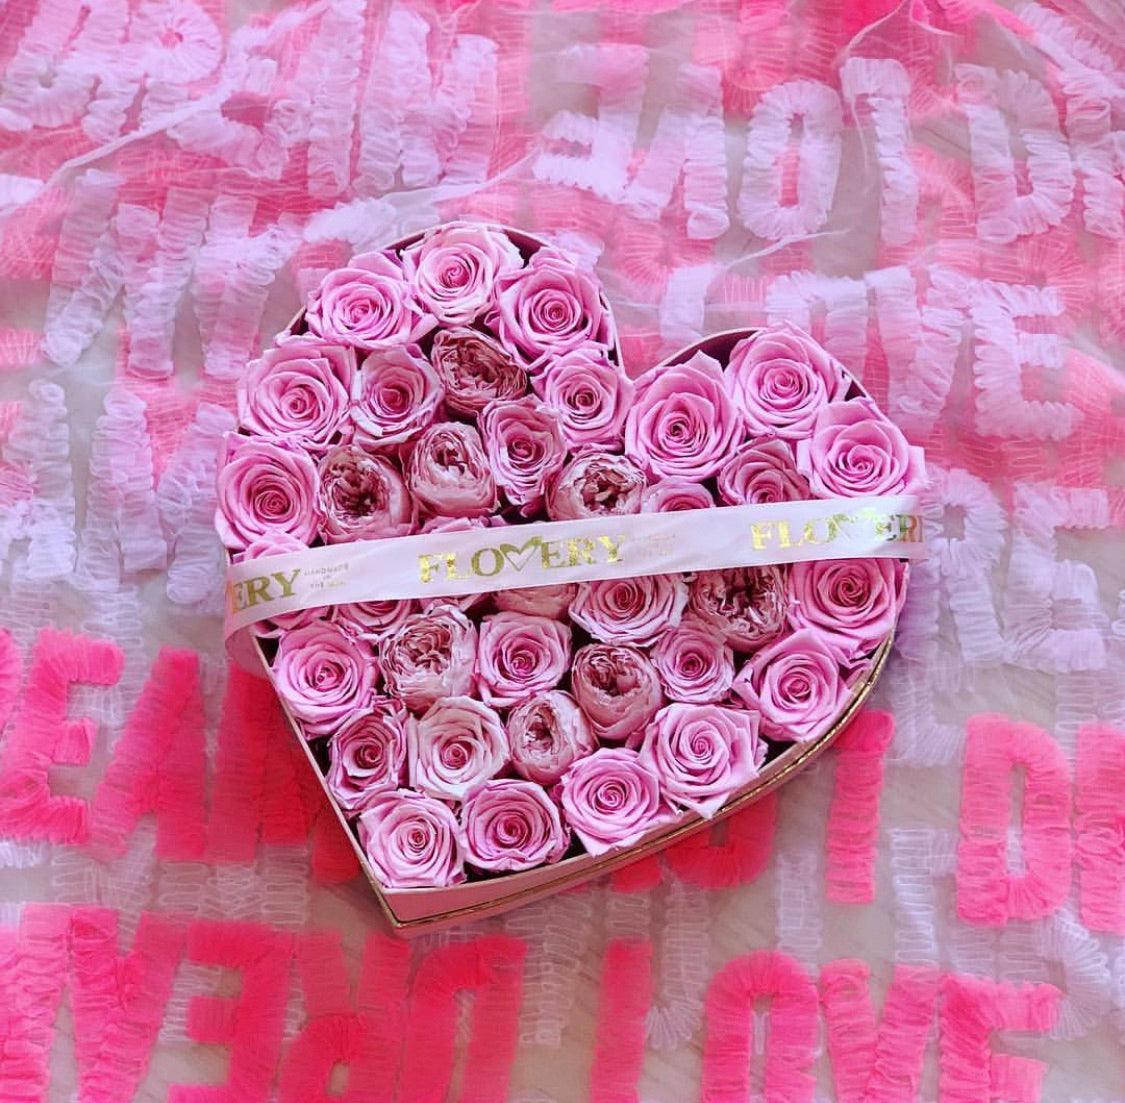 XL Red Ecuadorian Eternity Heart Shape Flowers Preserved Roses